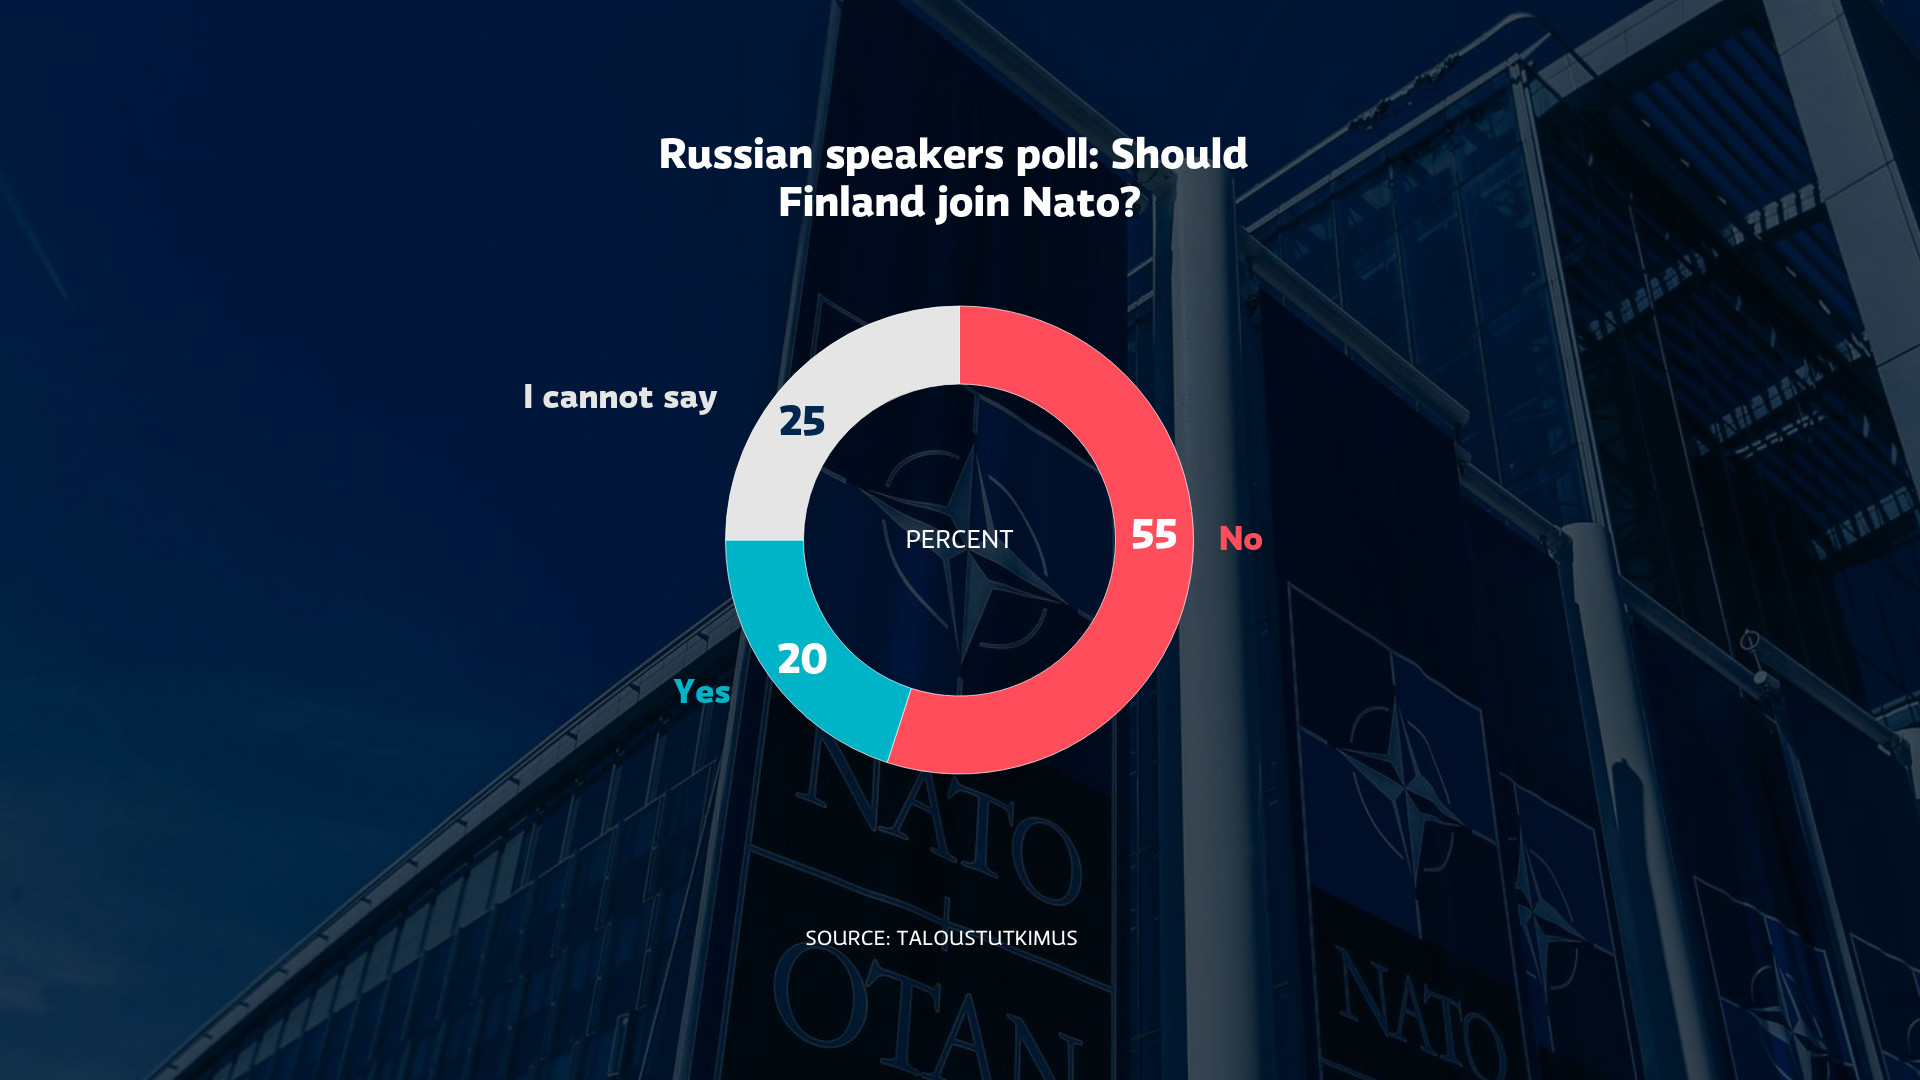 Yle’s survey: Russians have a more negative attitude towards Finland’s NATO membership